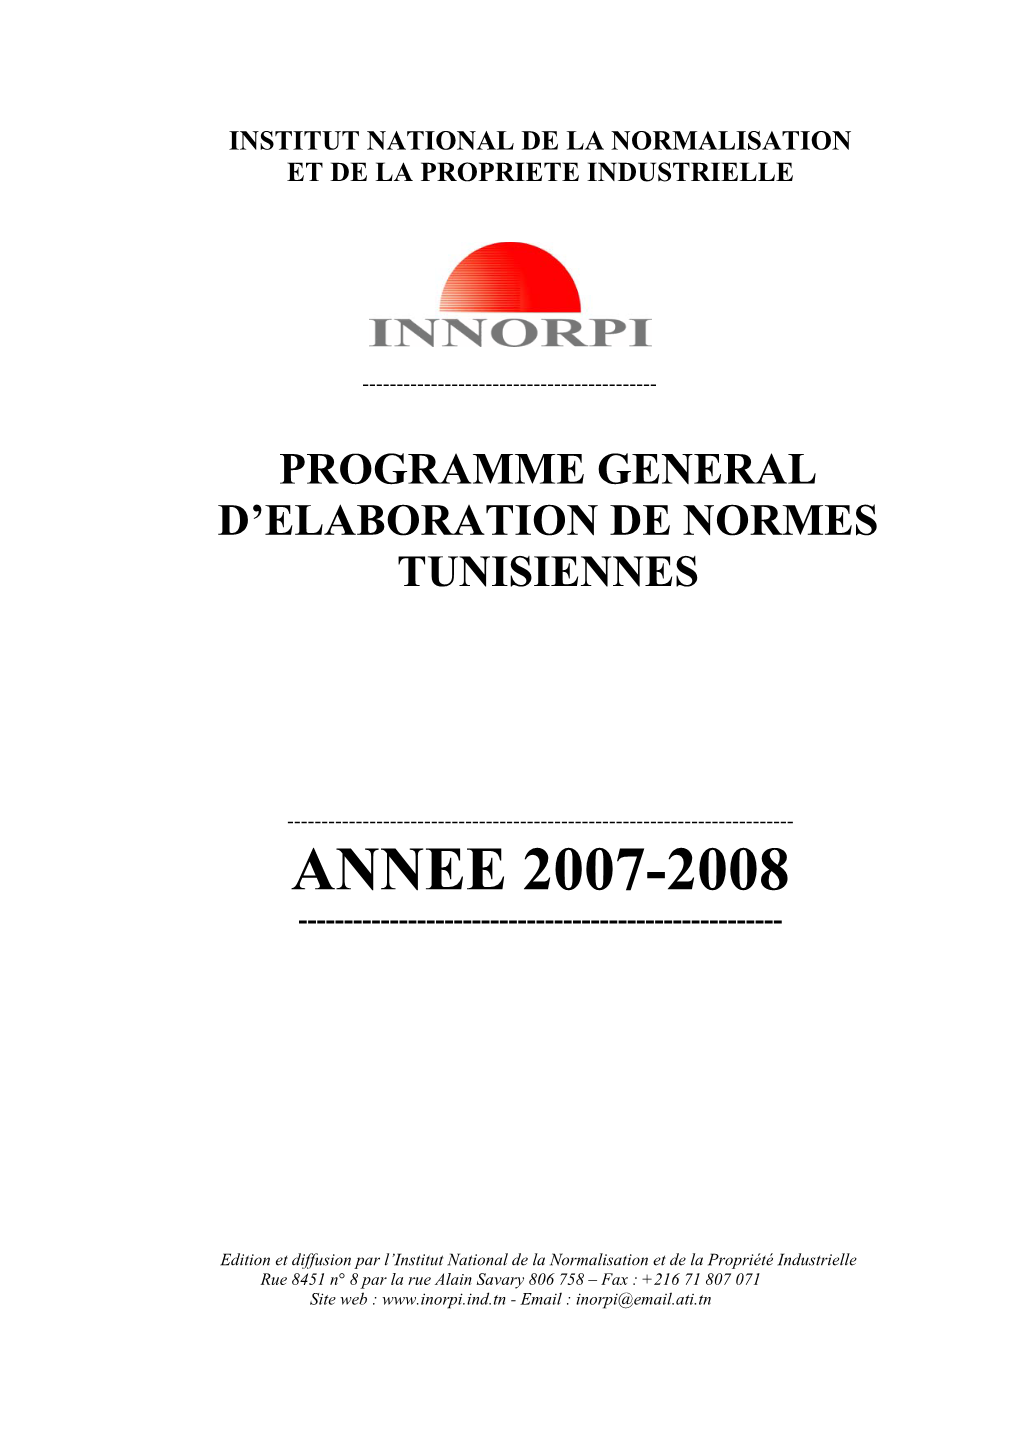 Annee 2007-2008